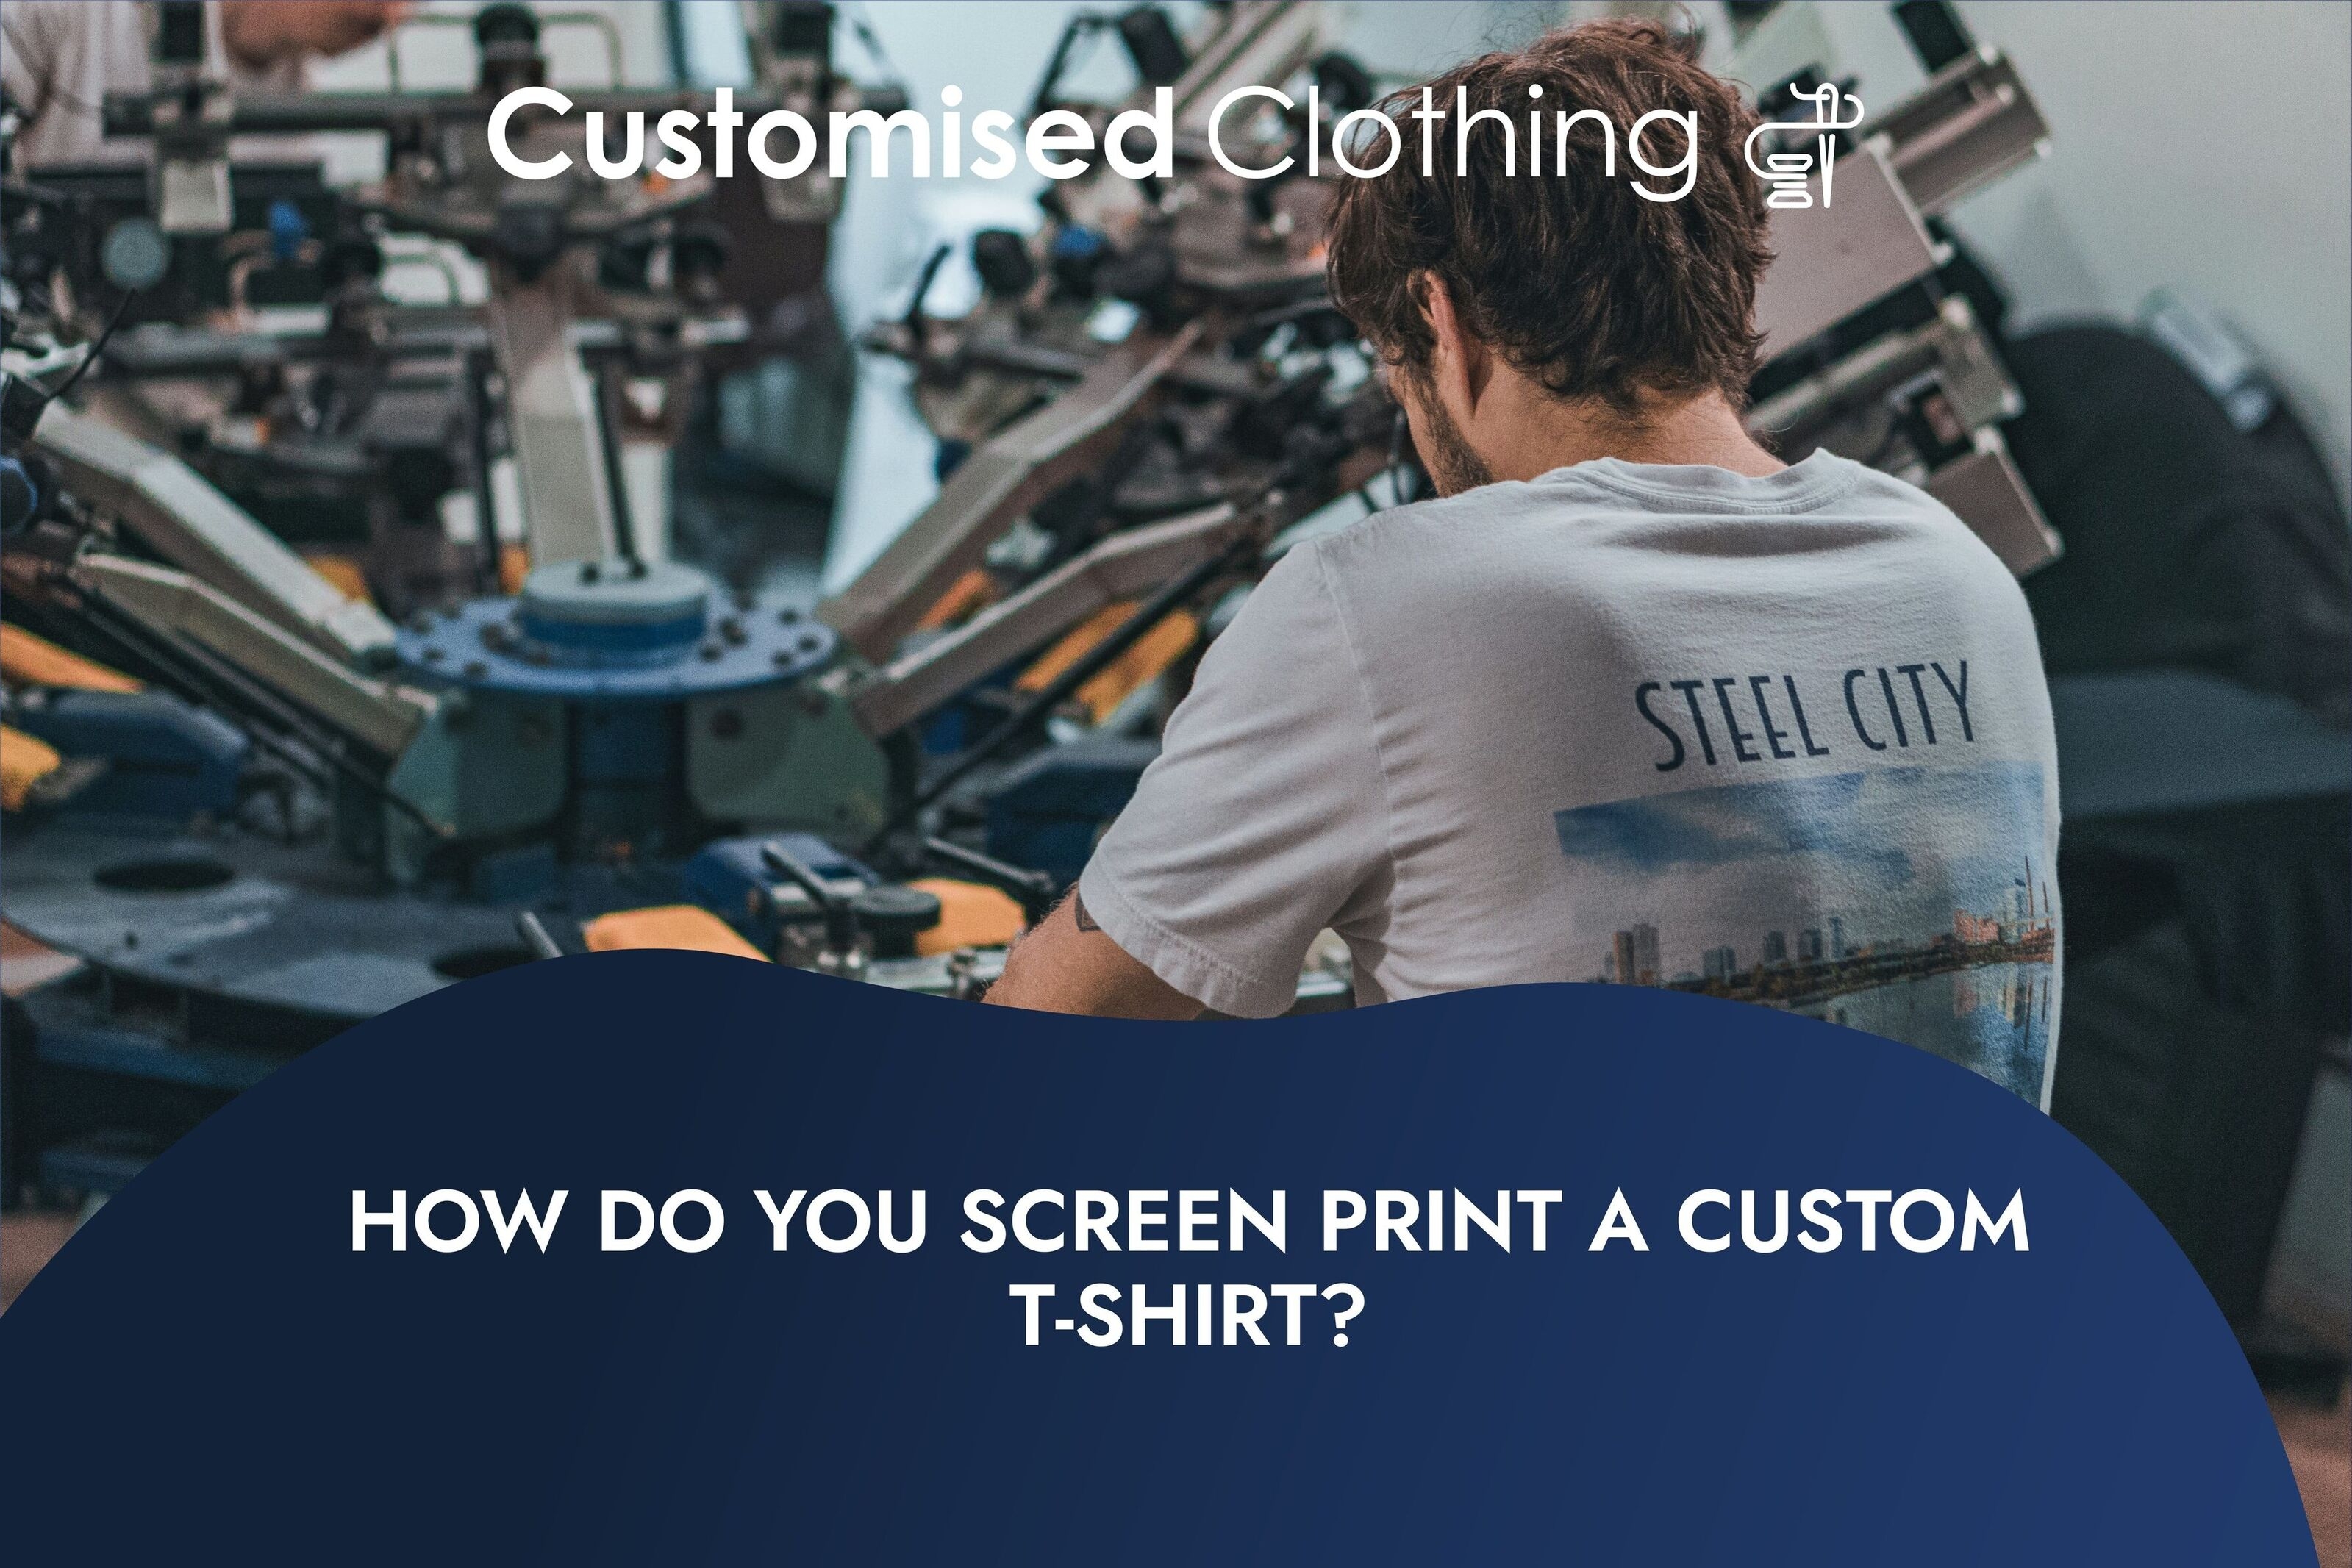 How do you screen print a custom t-shirt?